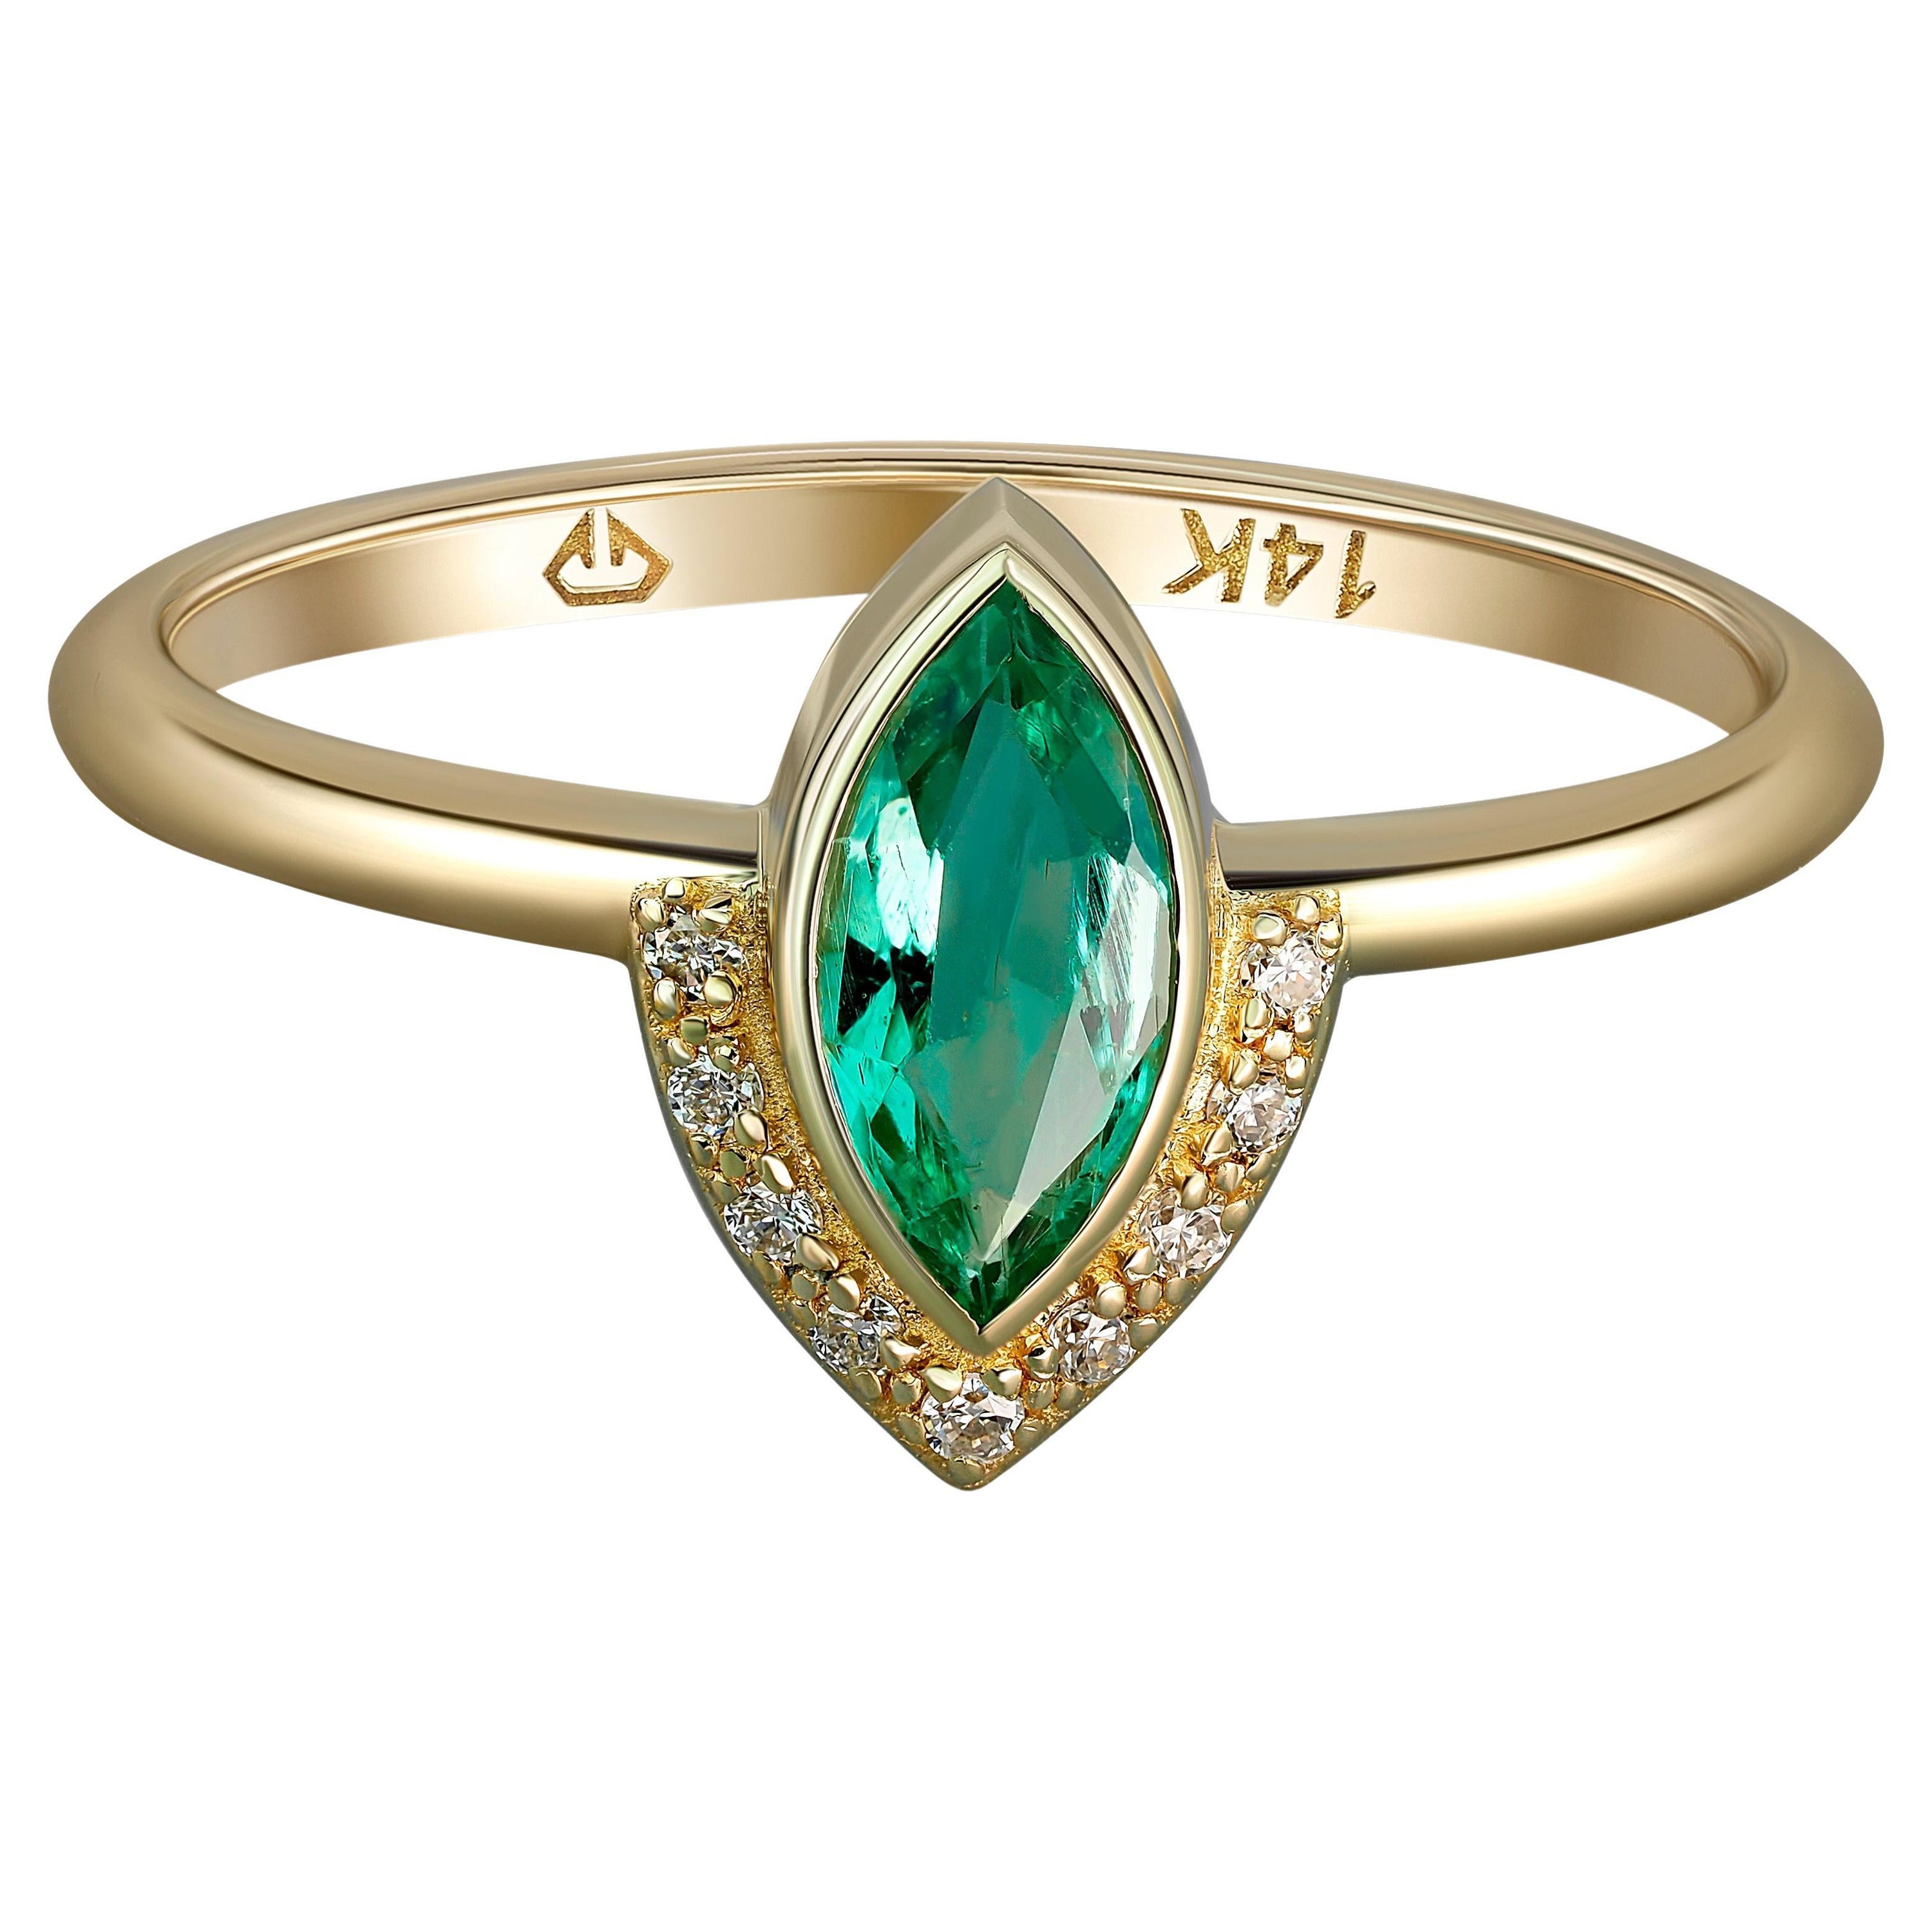 Marquise Emerald Ring in 14 Karat Yellow Gold, Genuine Emerald Ring